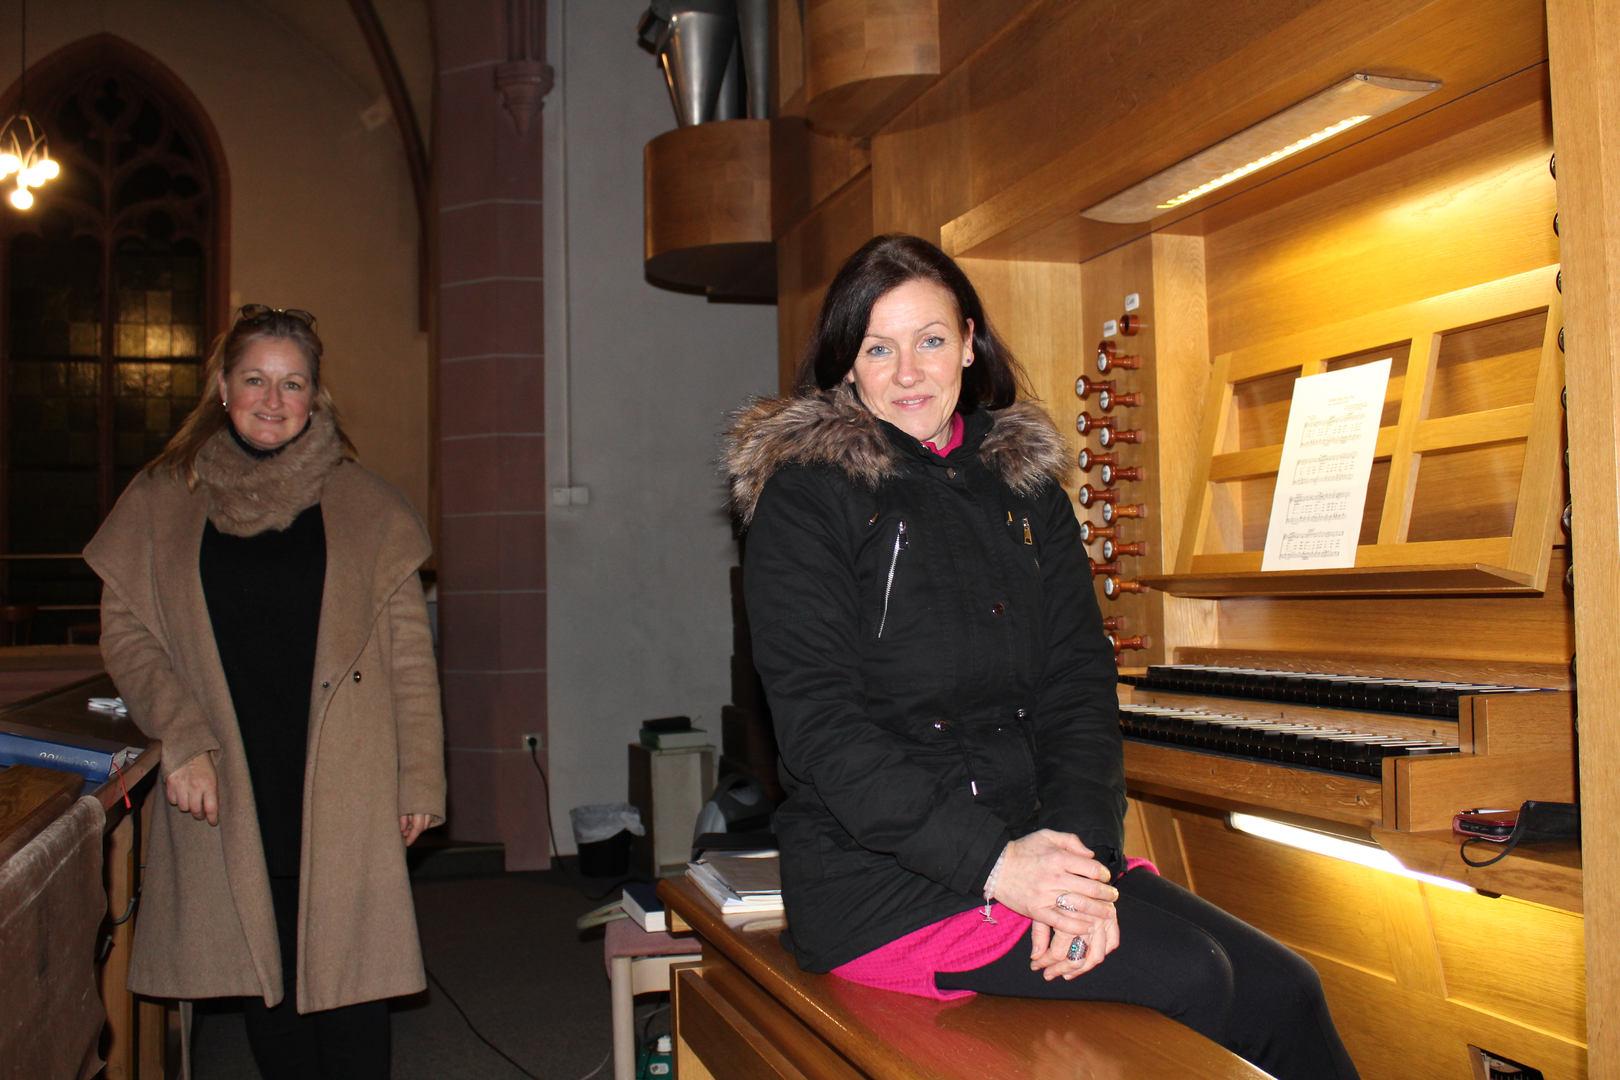 An der Orgel in St. Bonifatius: Katia Plaschka und Eva Maria Anton (c) Gerhard Kollmer 2020